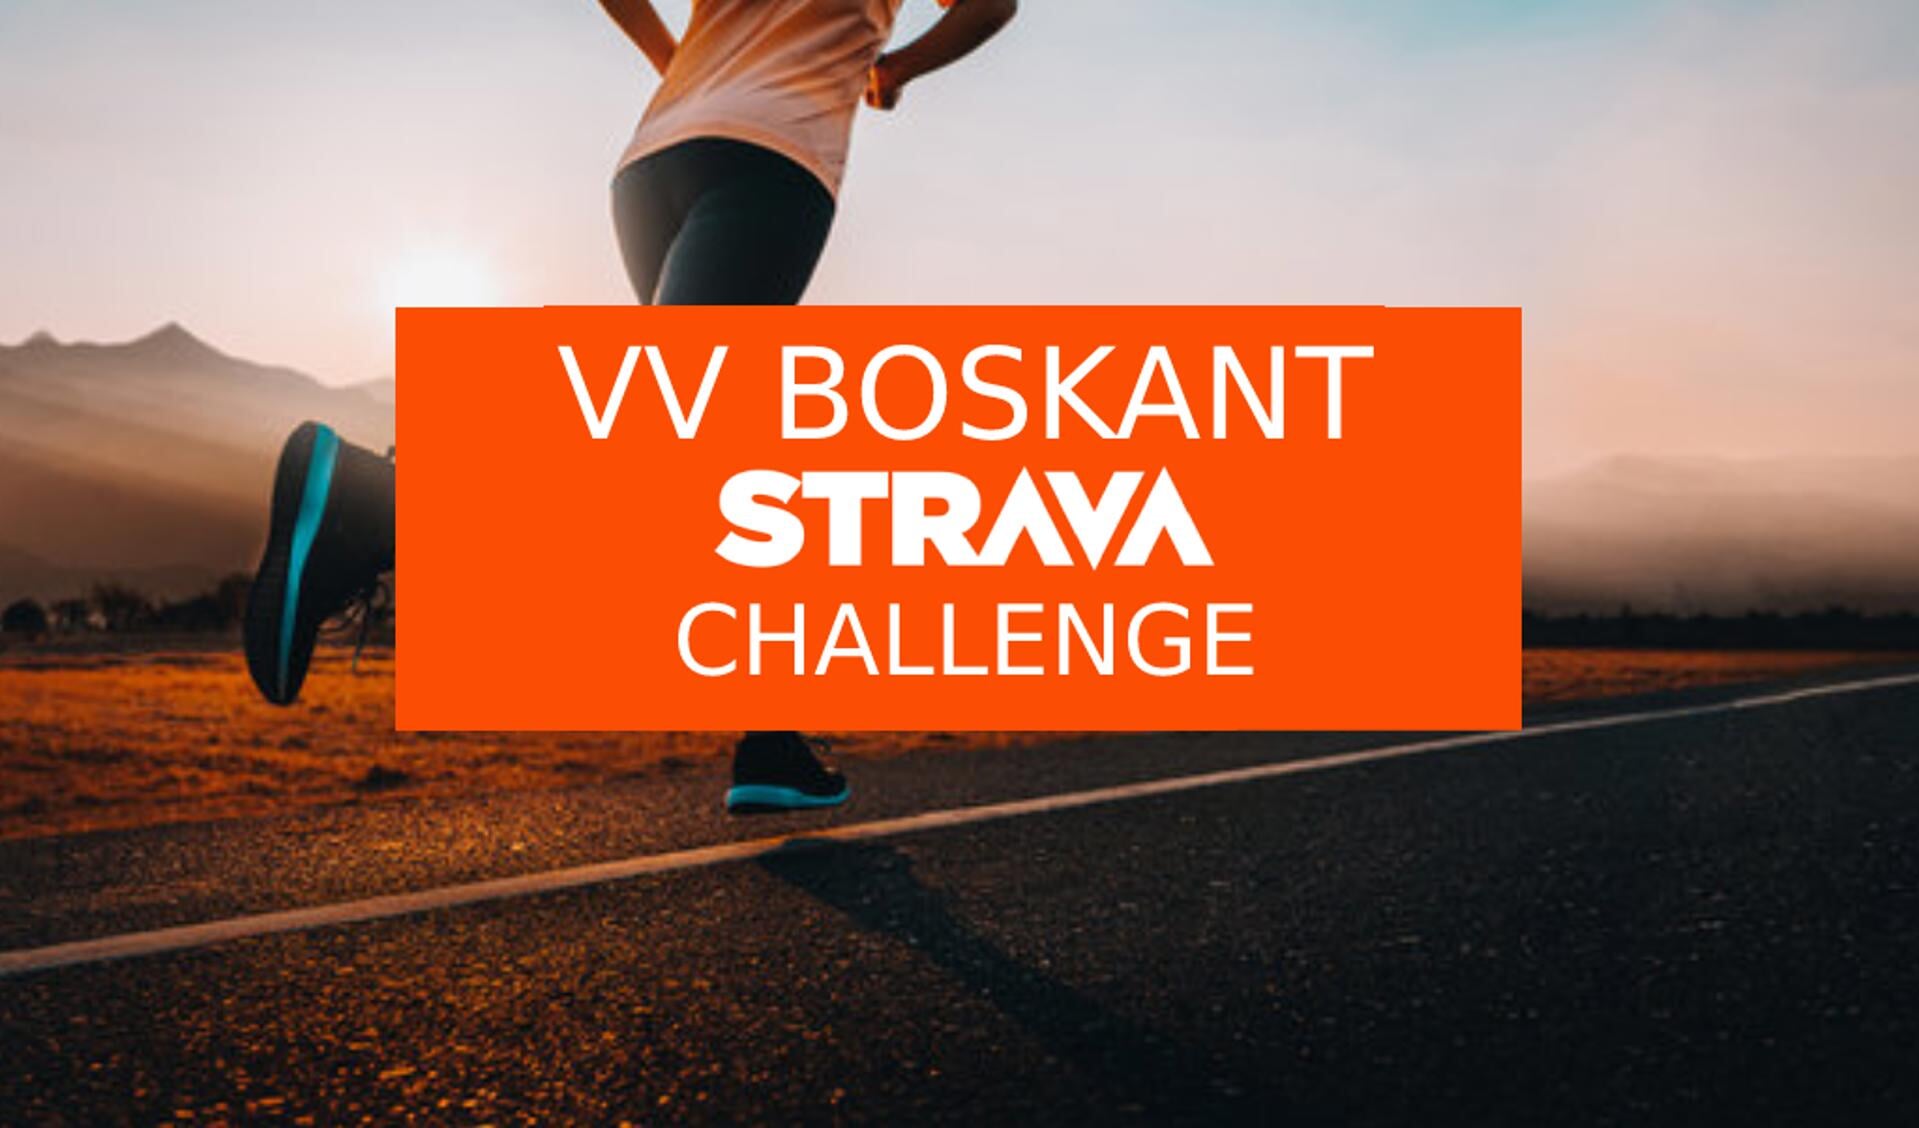 VV Boskant Strava challange